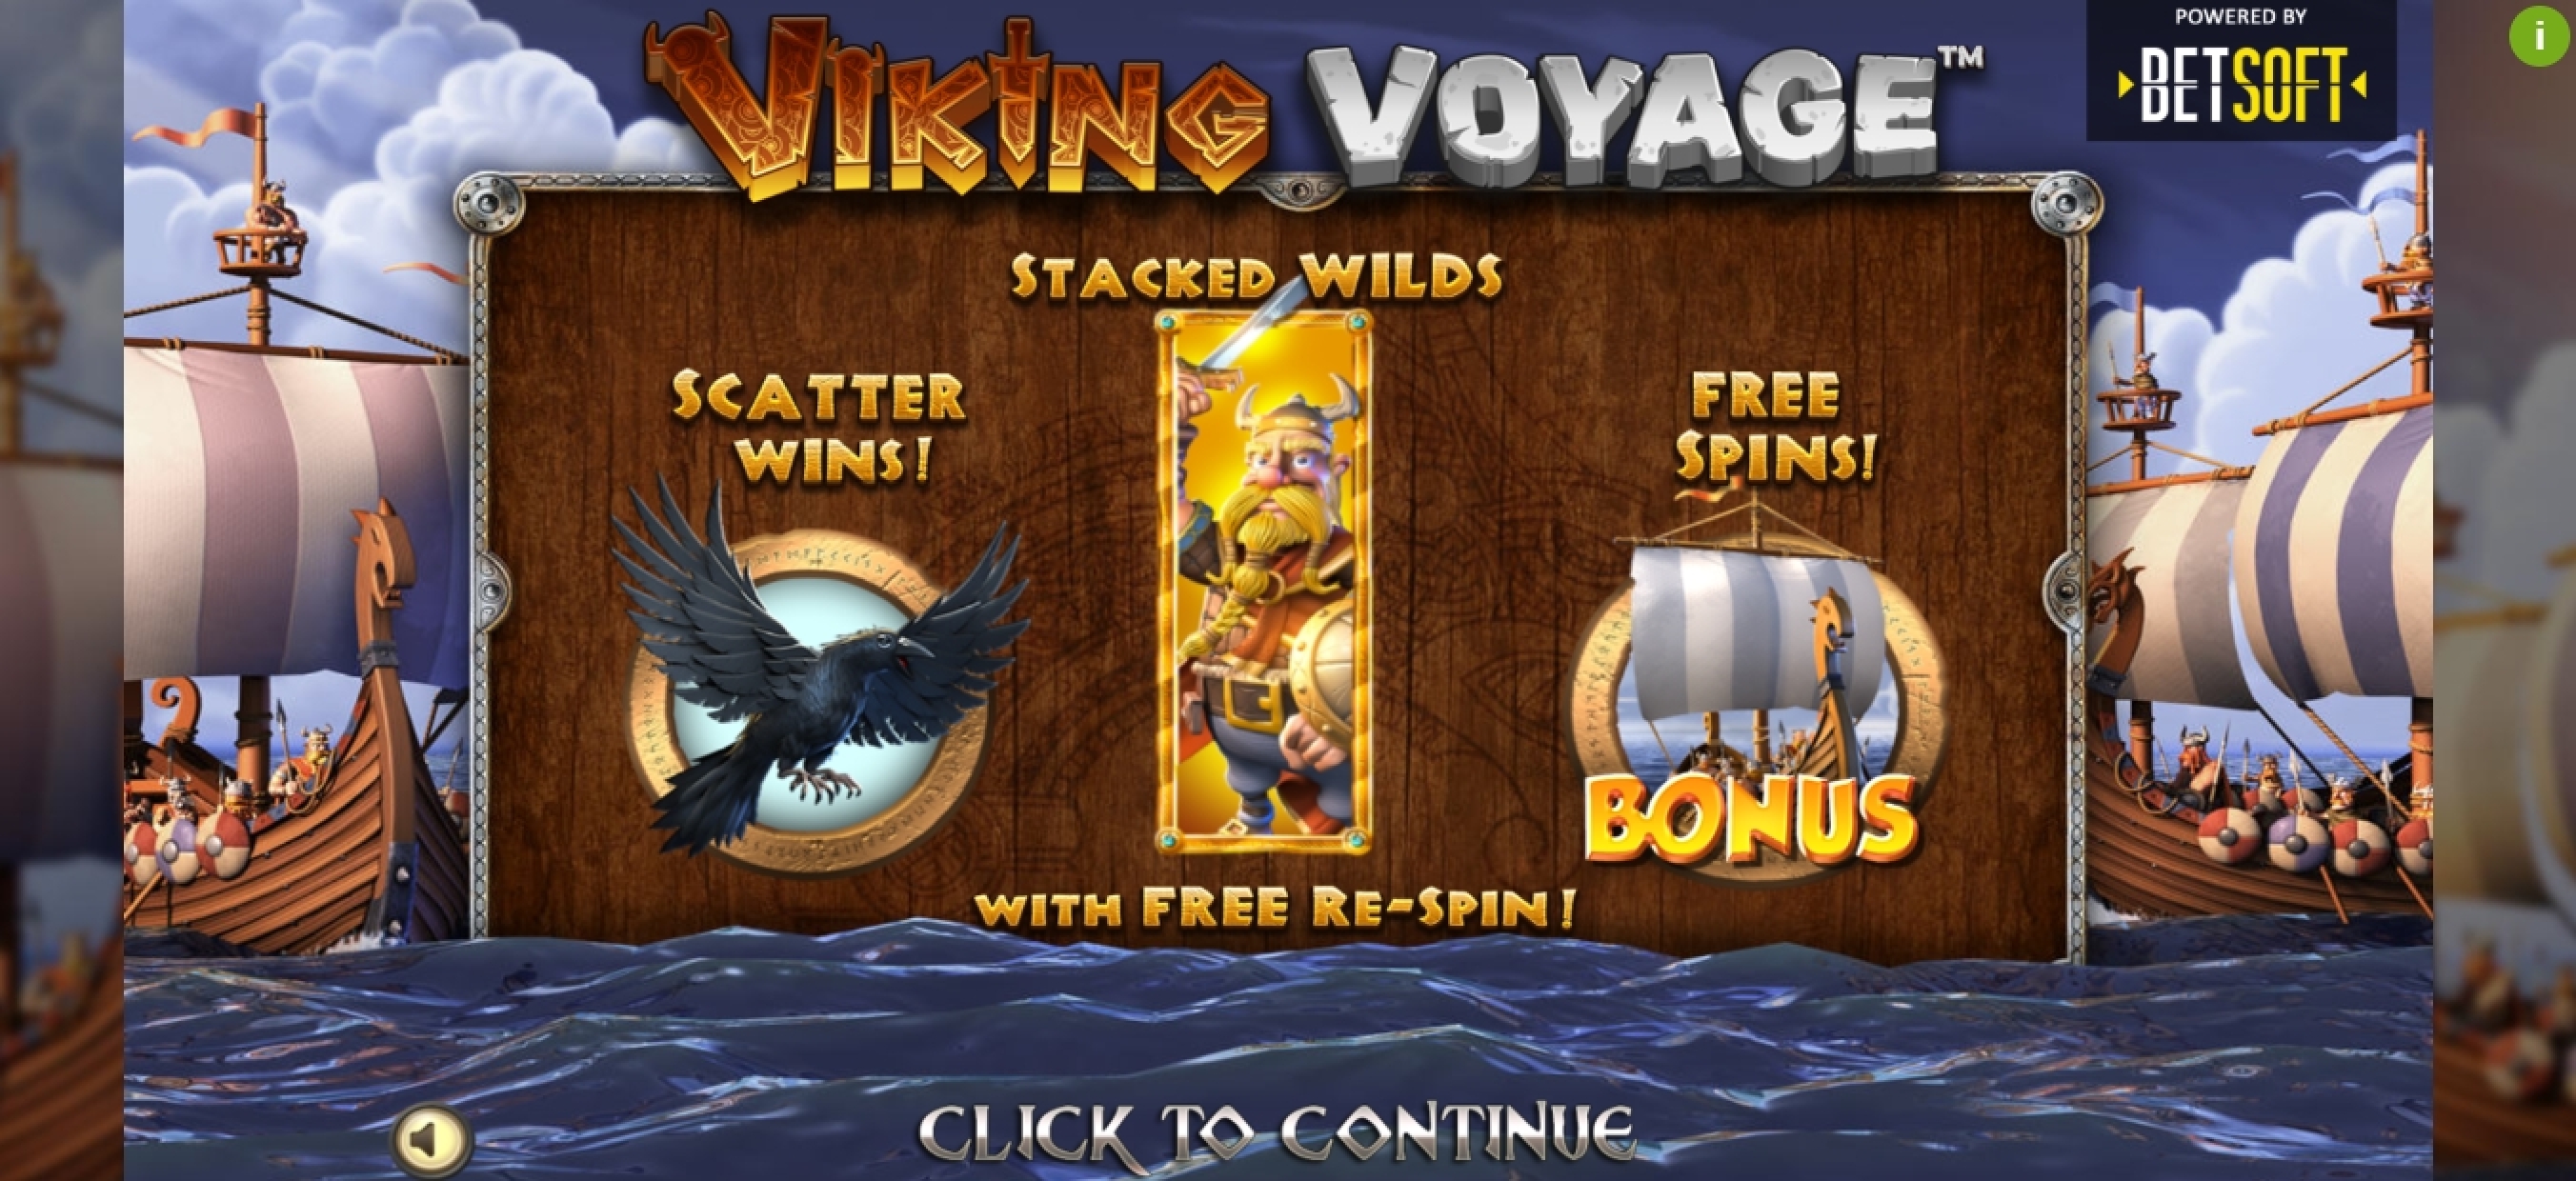 Play Viking Voyage Free Casino Slot Game by Betsoft